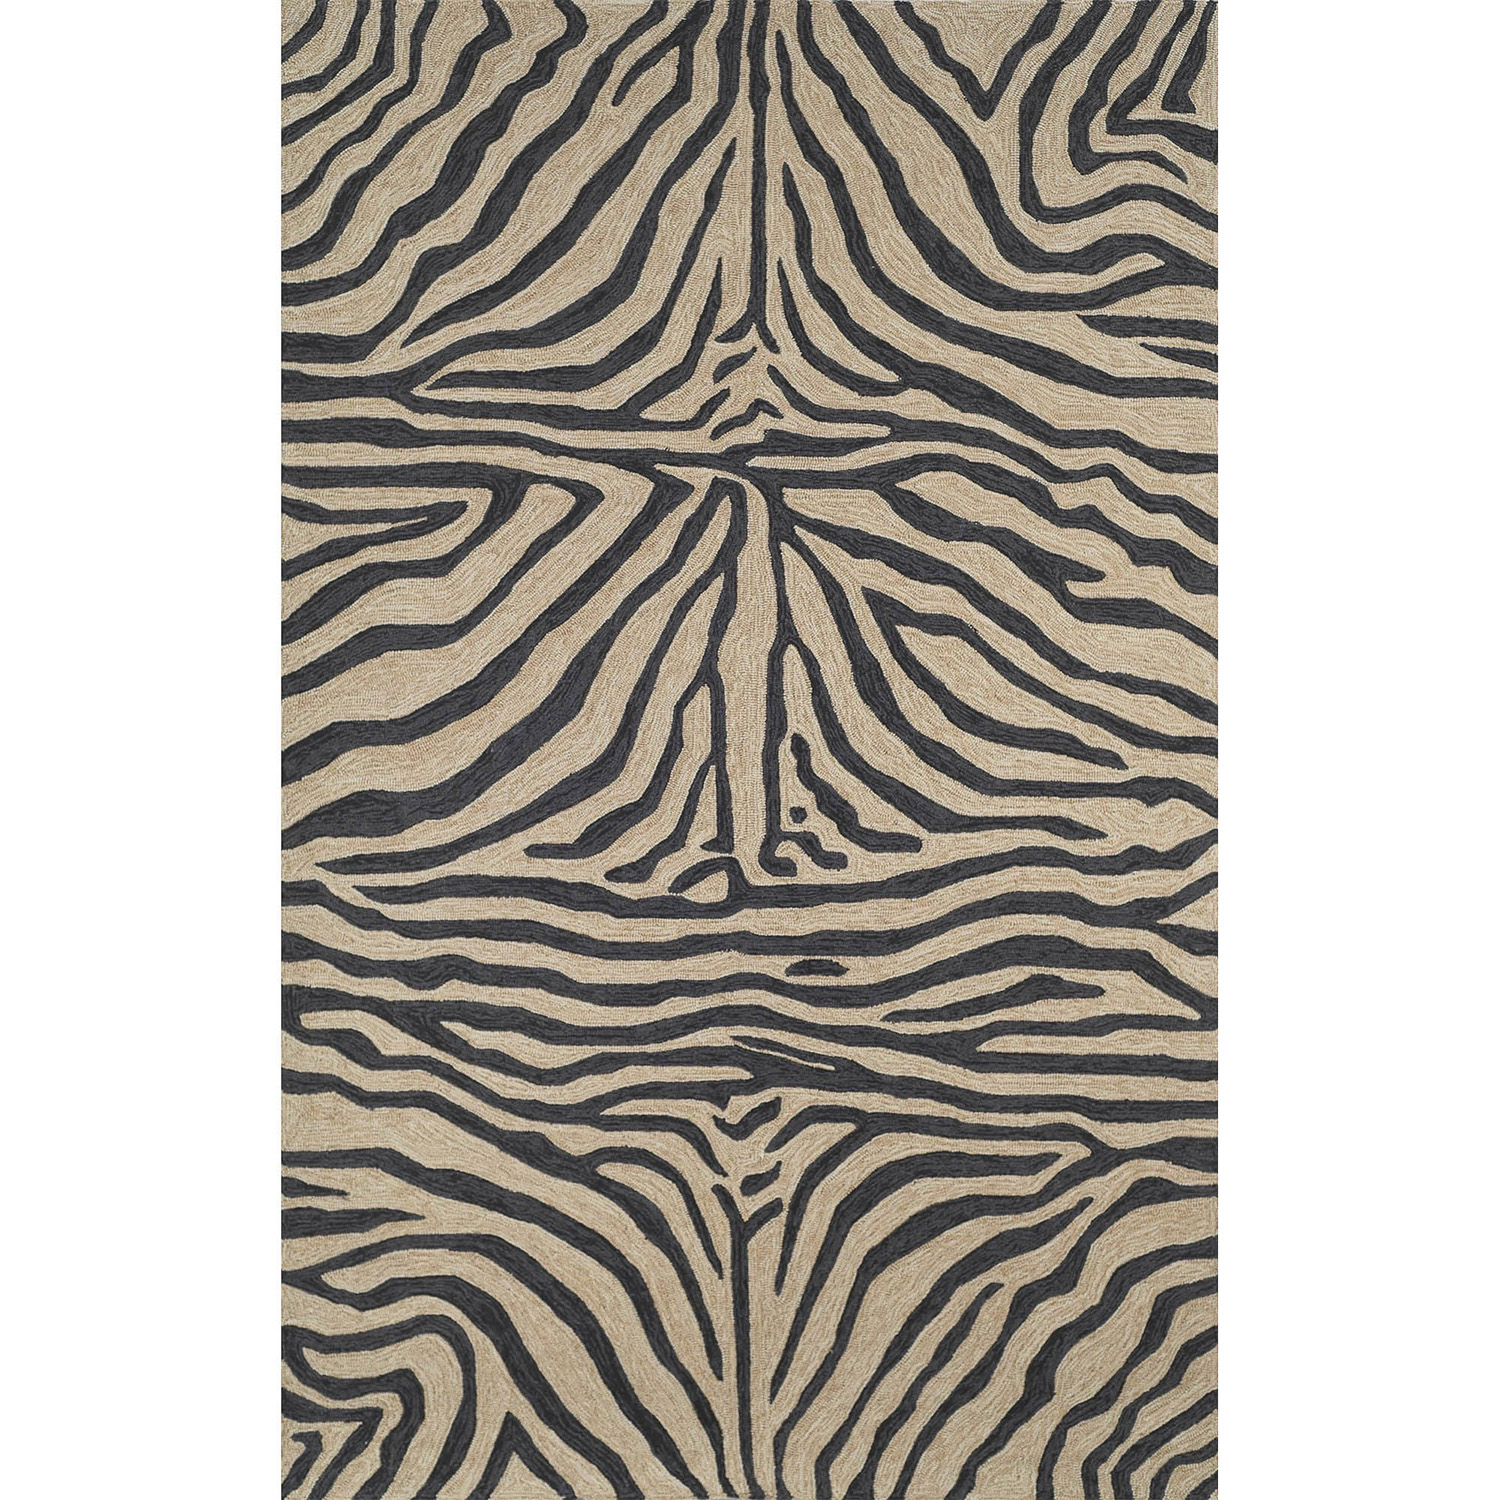 Liora Manne Ravella Indoor/Outdoor Durable Hand-Tufted  UV Stabilized Rug- Zebra Black  Product Image